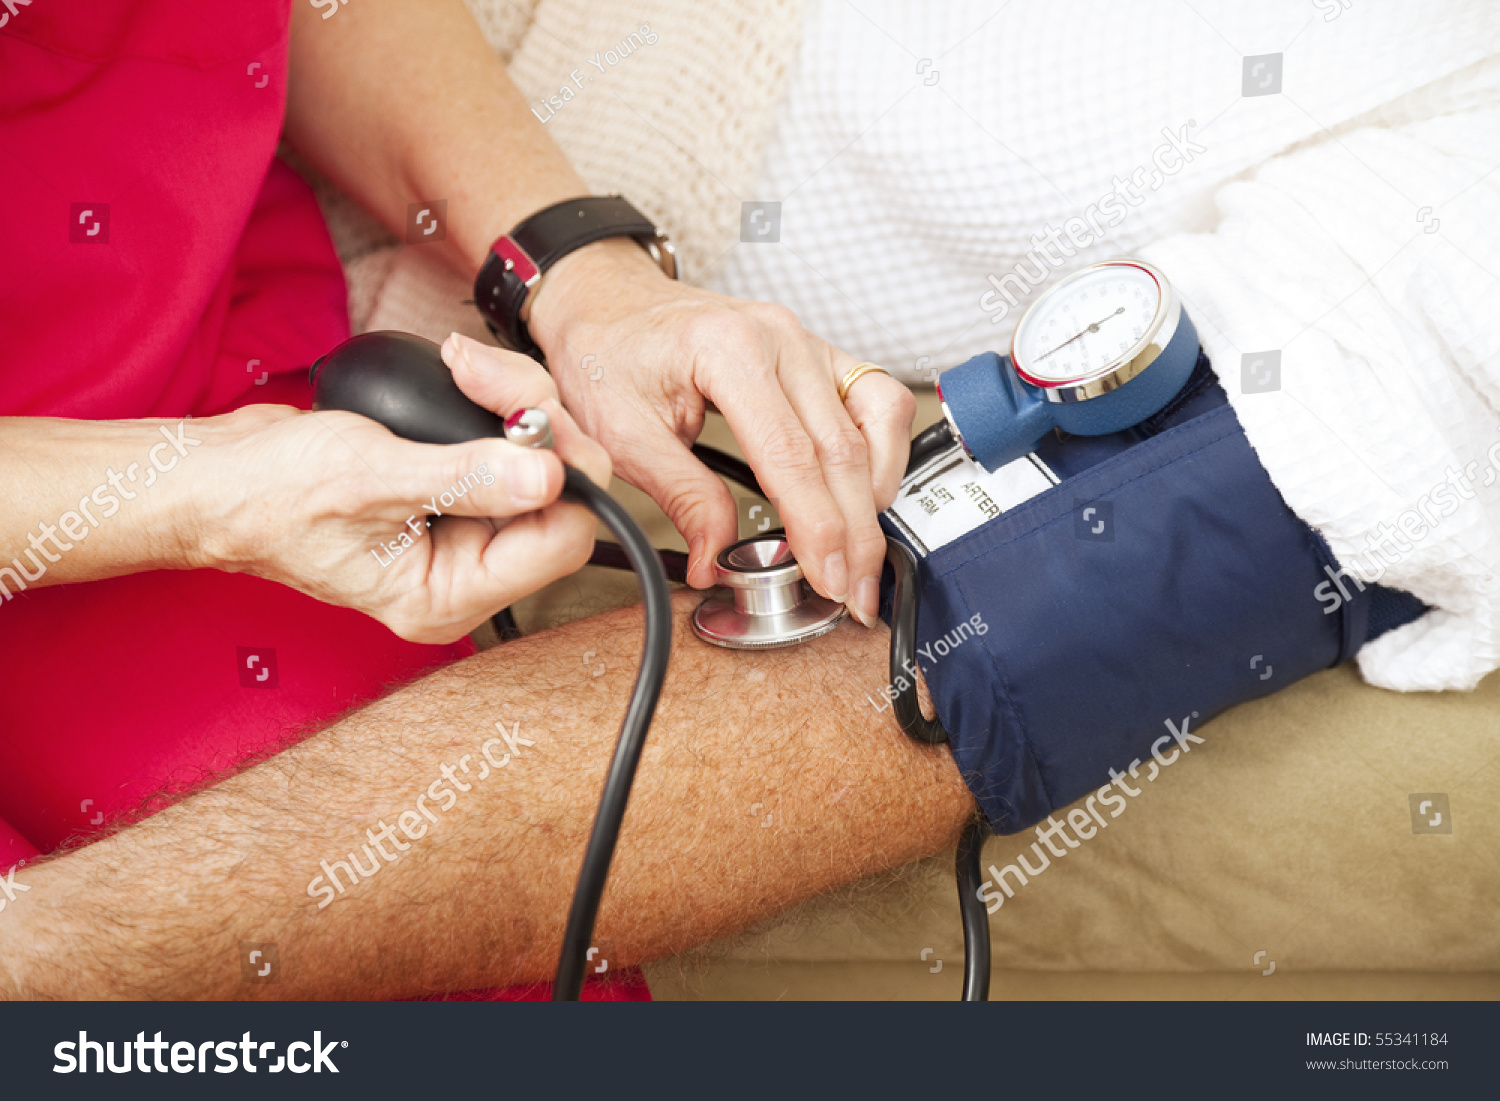 Nurse Taking A Patients Blood Pressure Using A Sphygmomanometer